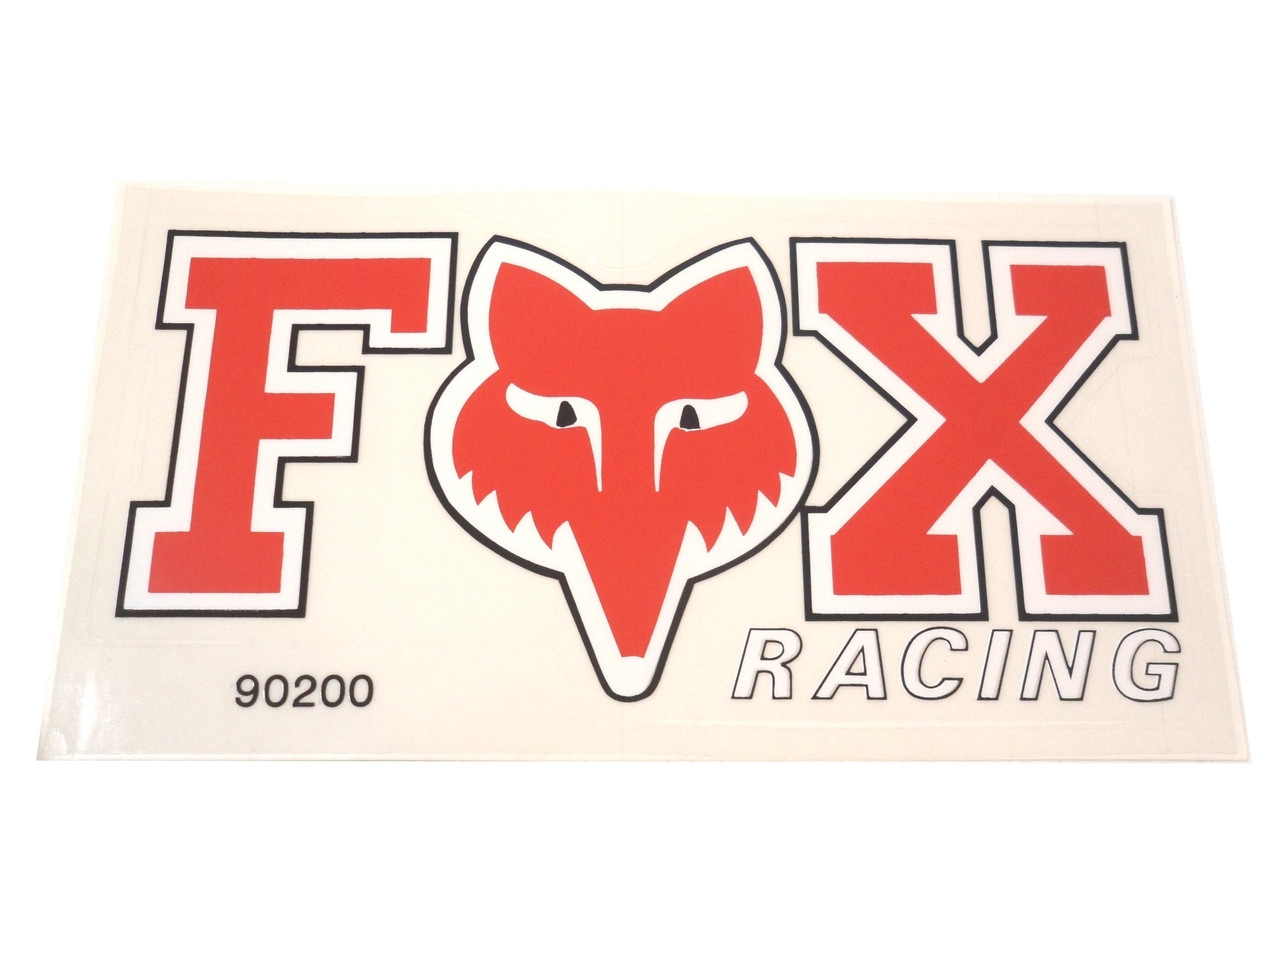 "Fox Racing" Retro Replica Decal - Red & White 